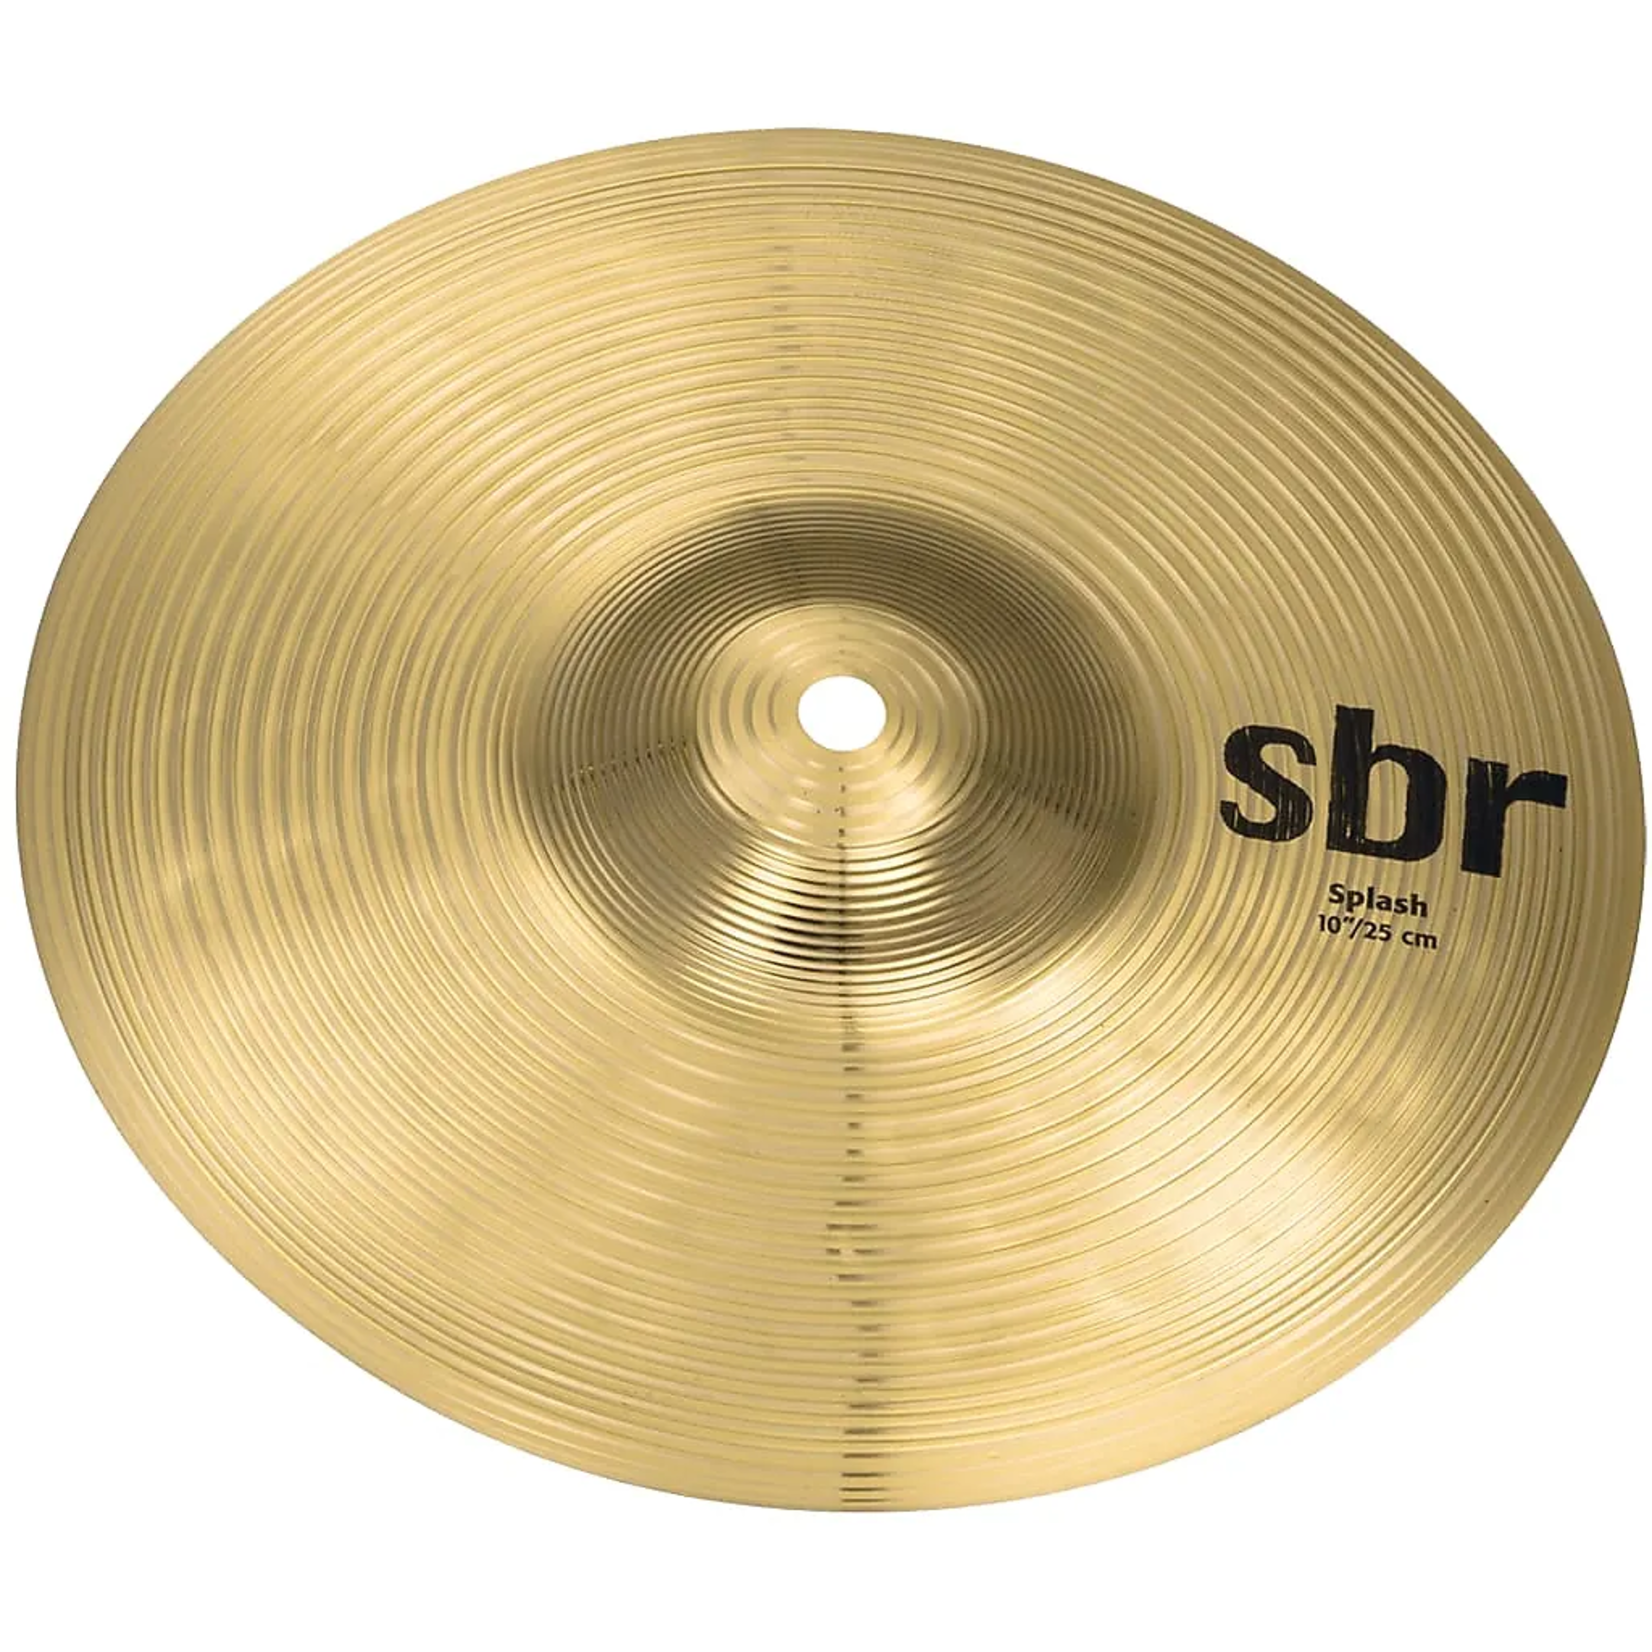 Sabian Sabian SBR 10" Splash Cymbal